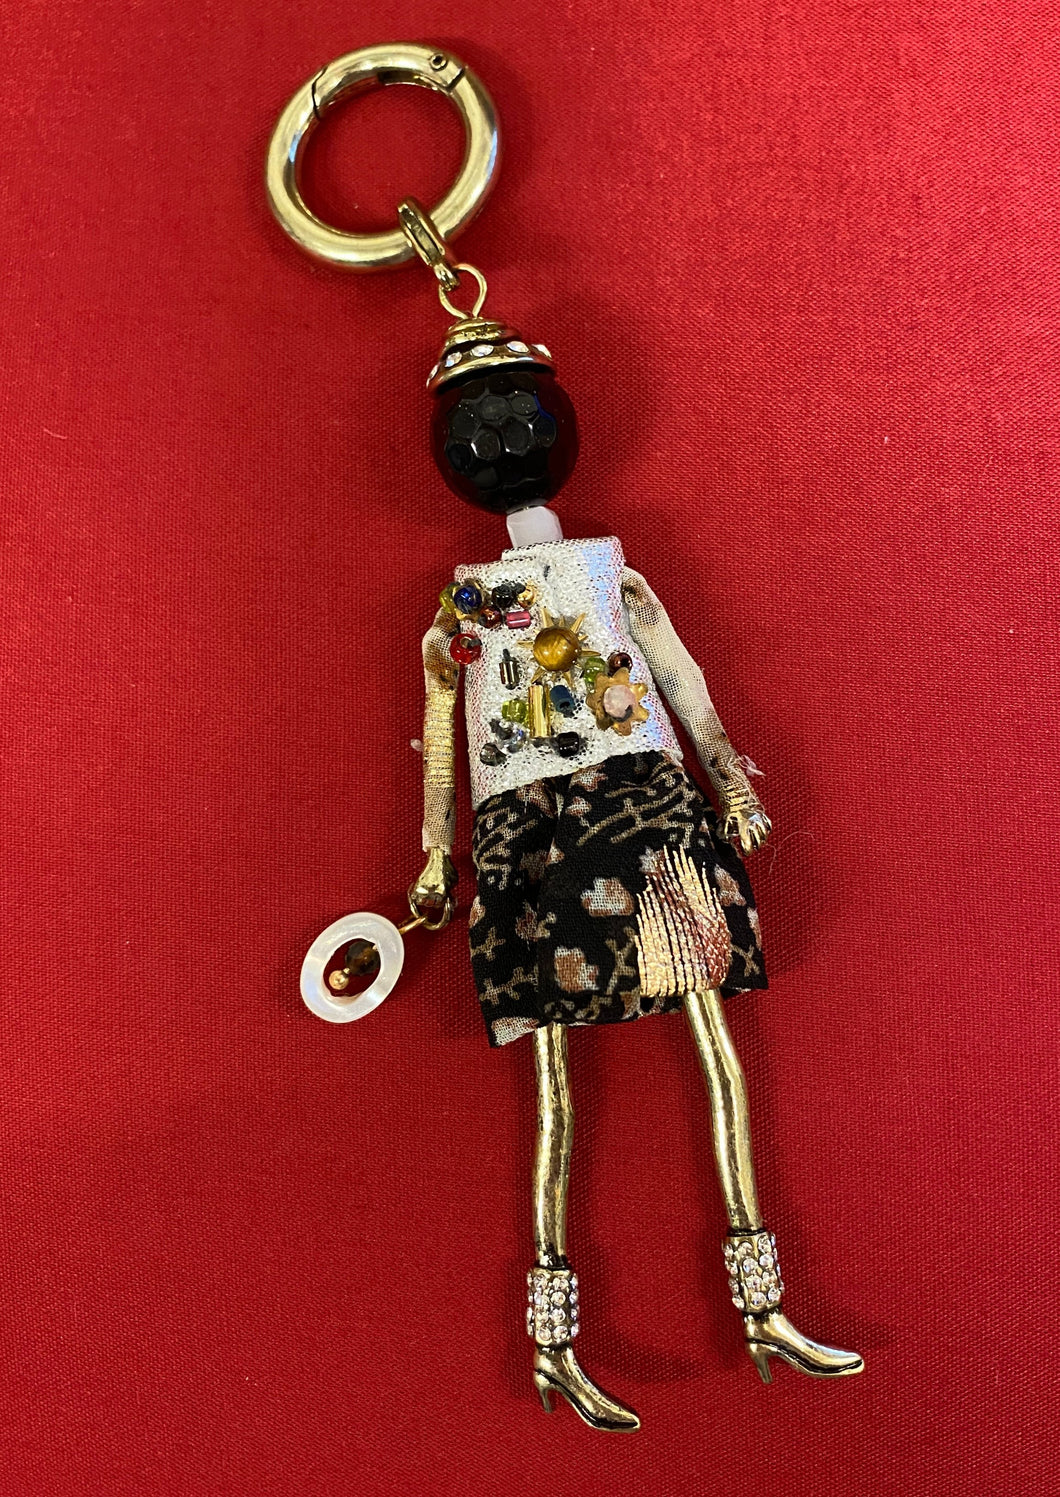 Gogo Doll Key Chain - Floral Black & White